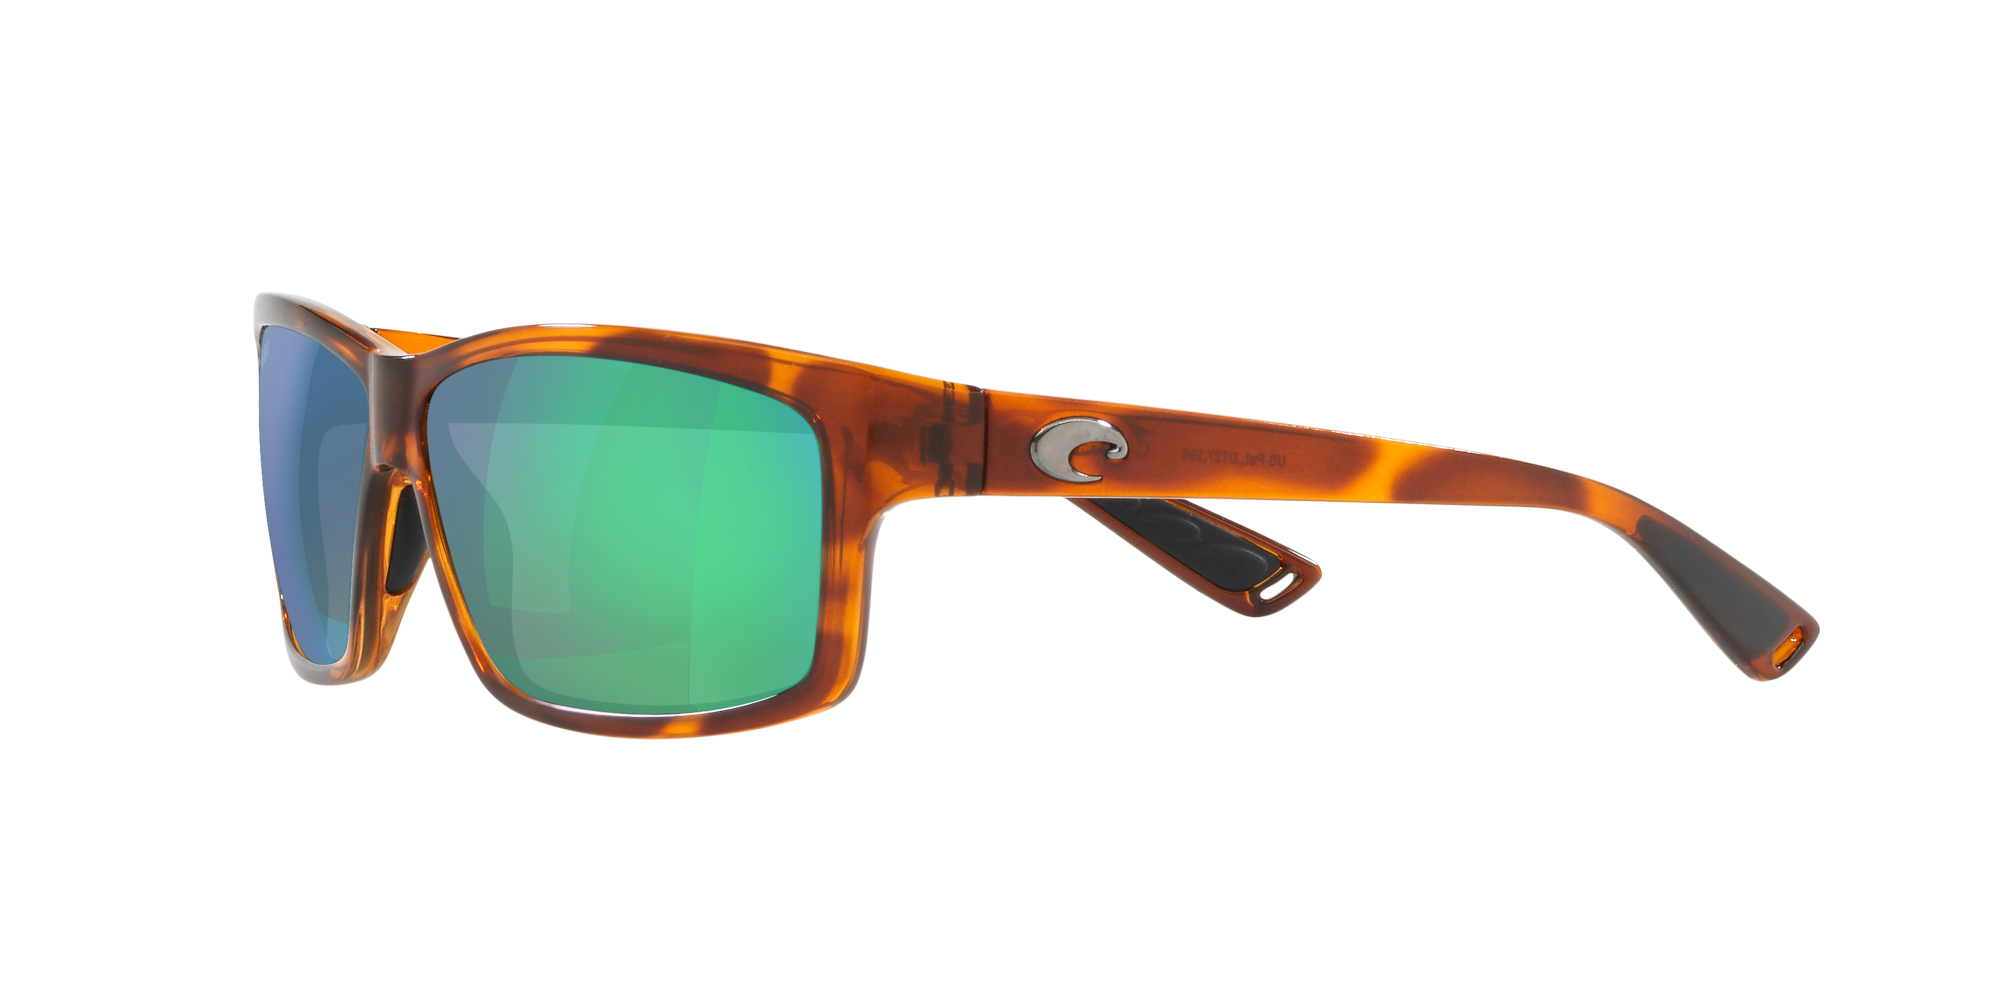 COSTA DEL MAR Luke POLARIZED Sunglasses Tortoise/Blue Mirror 400G NEW $199 